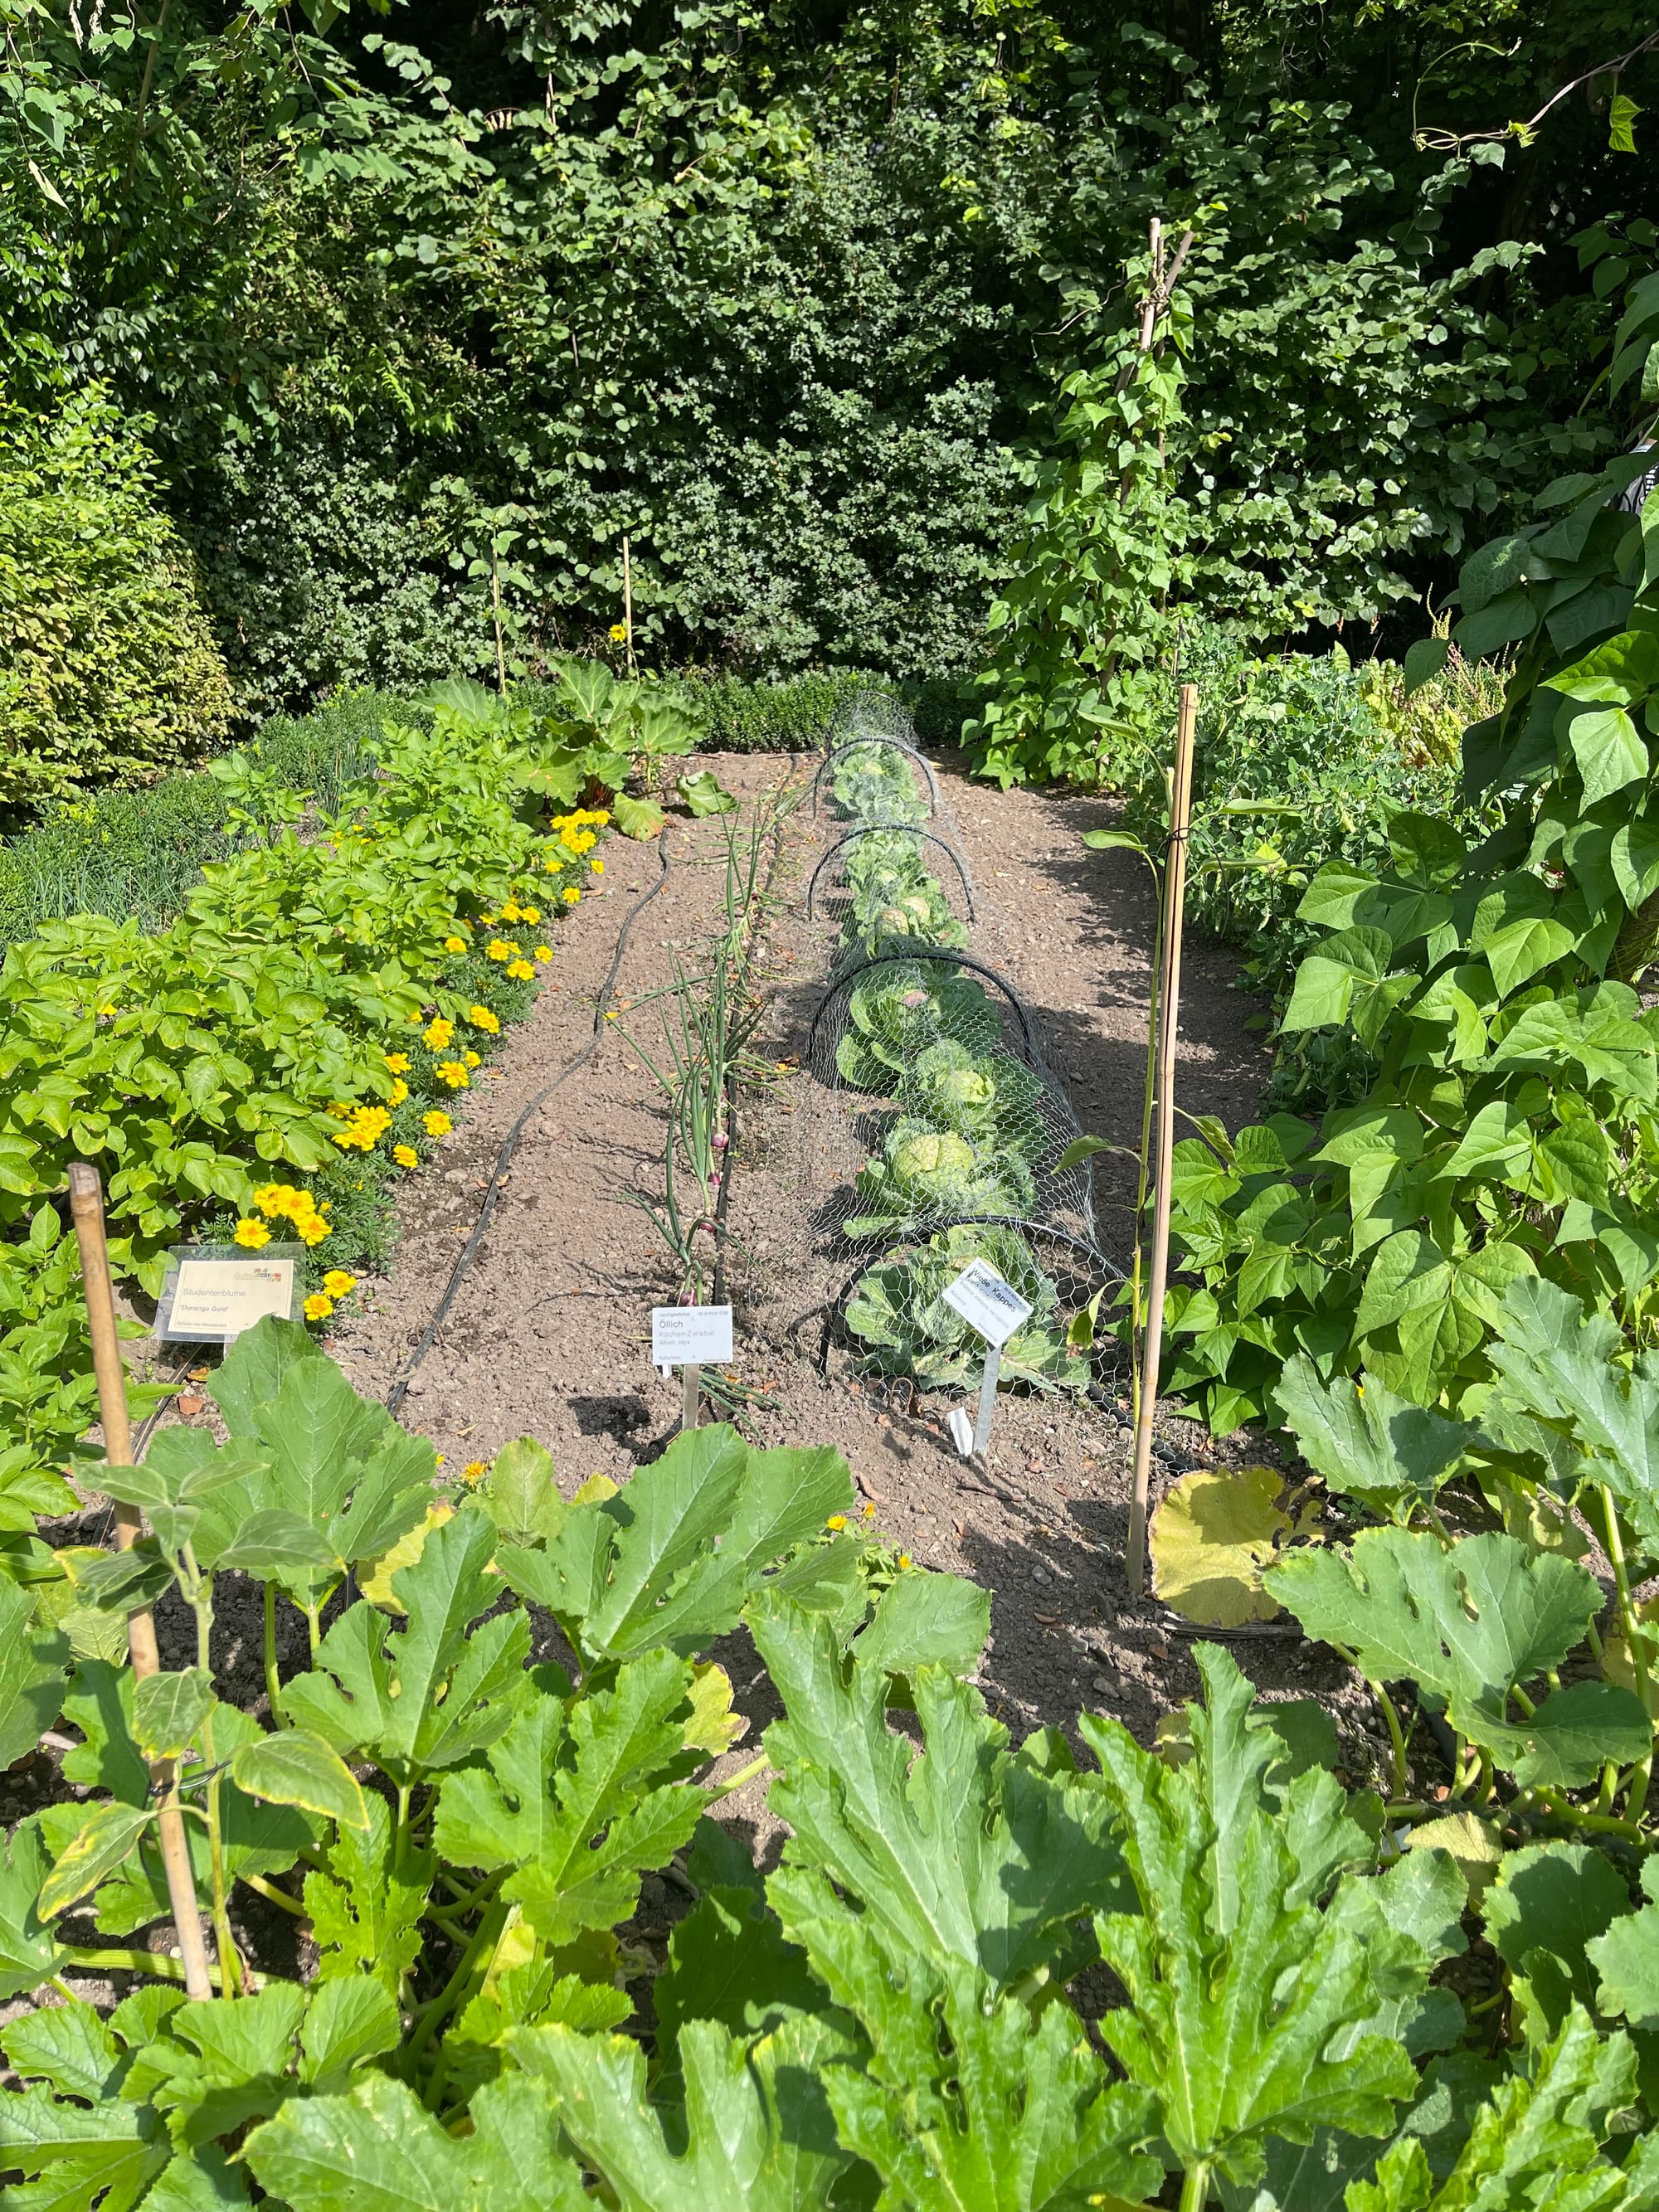 Designing your garden space